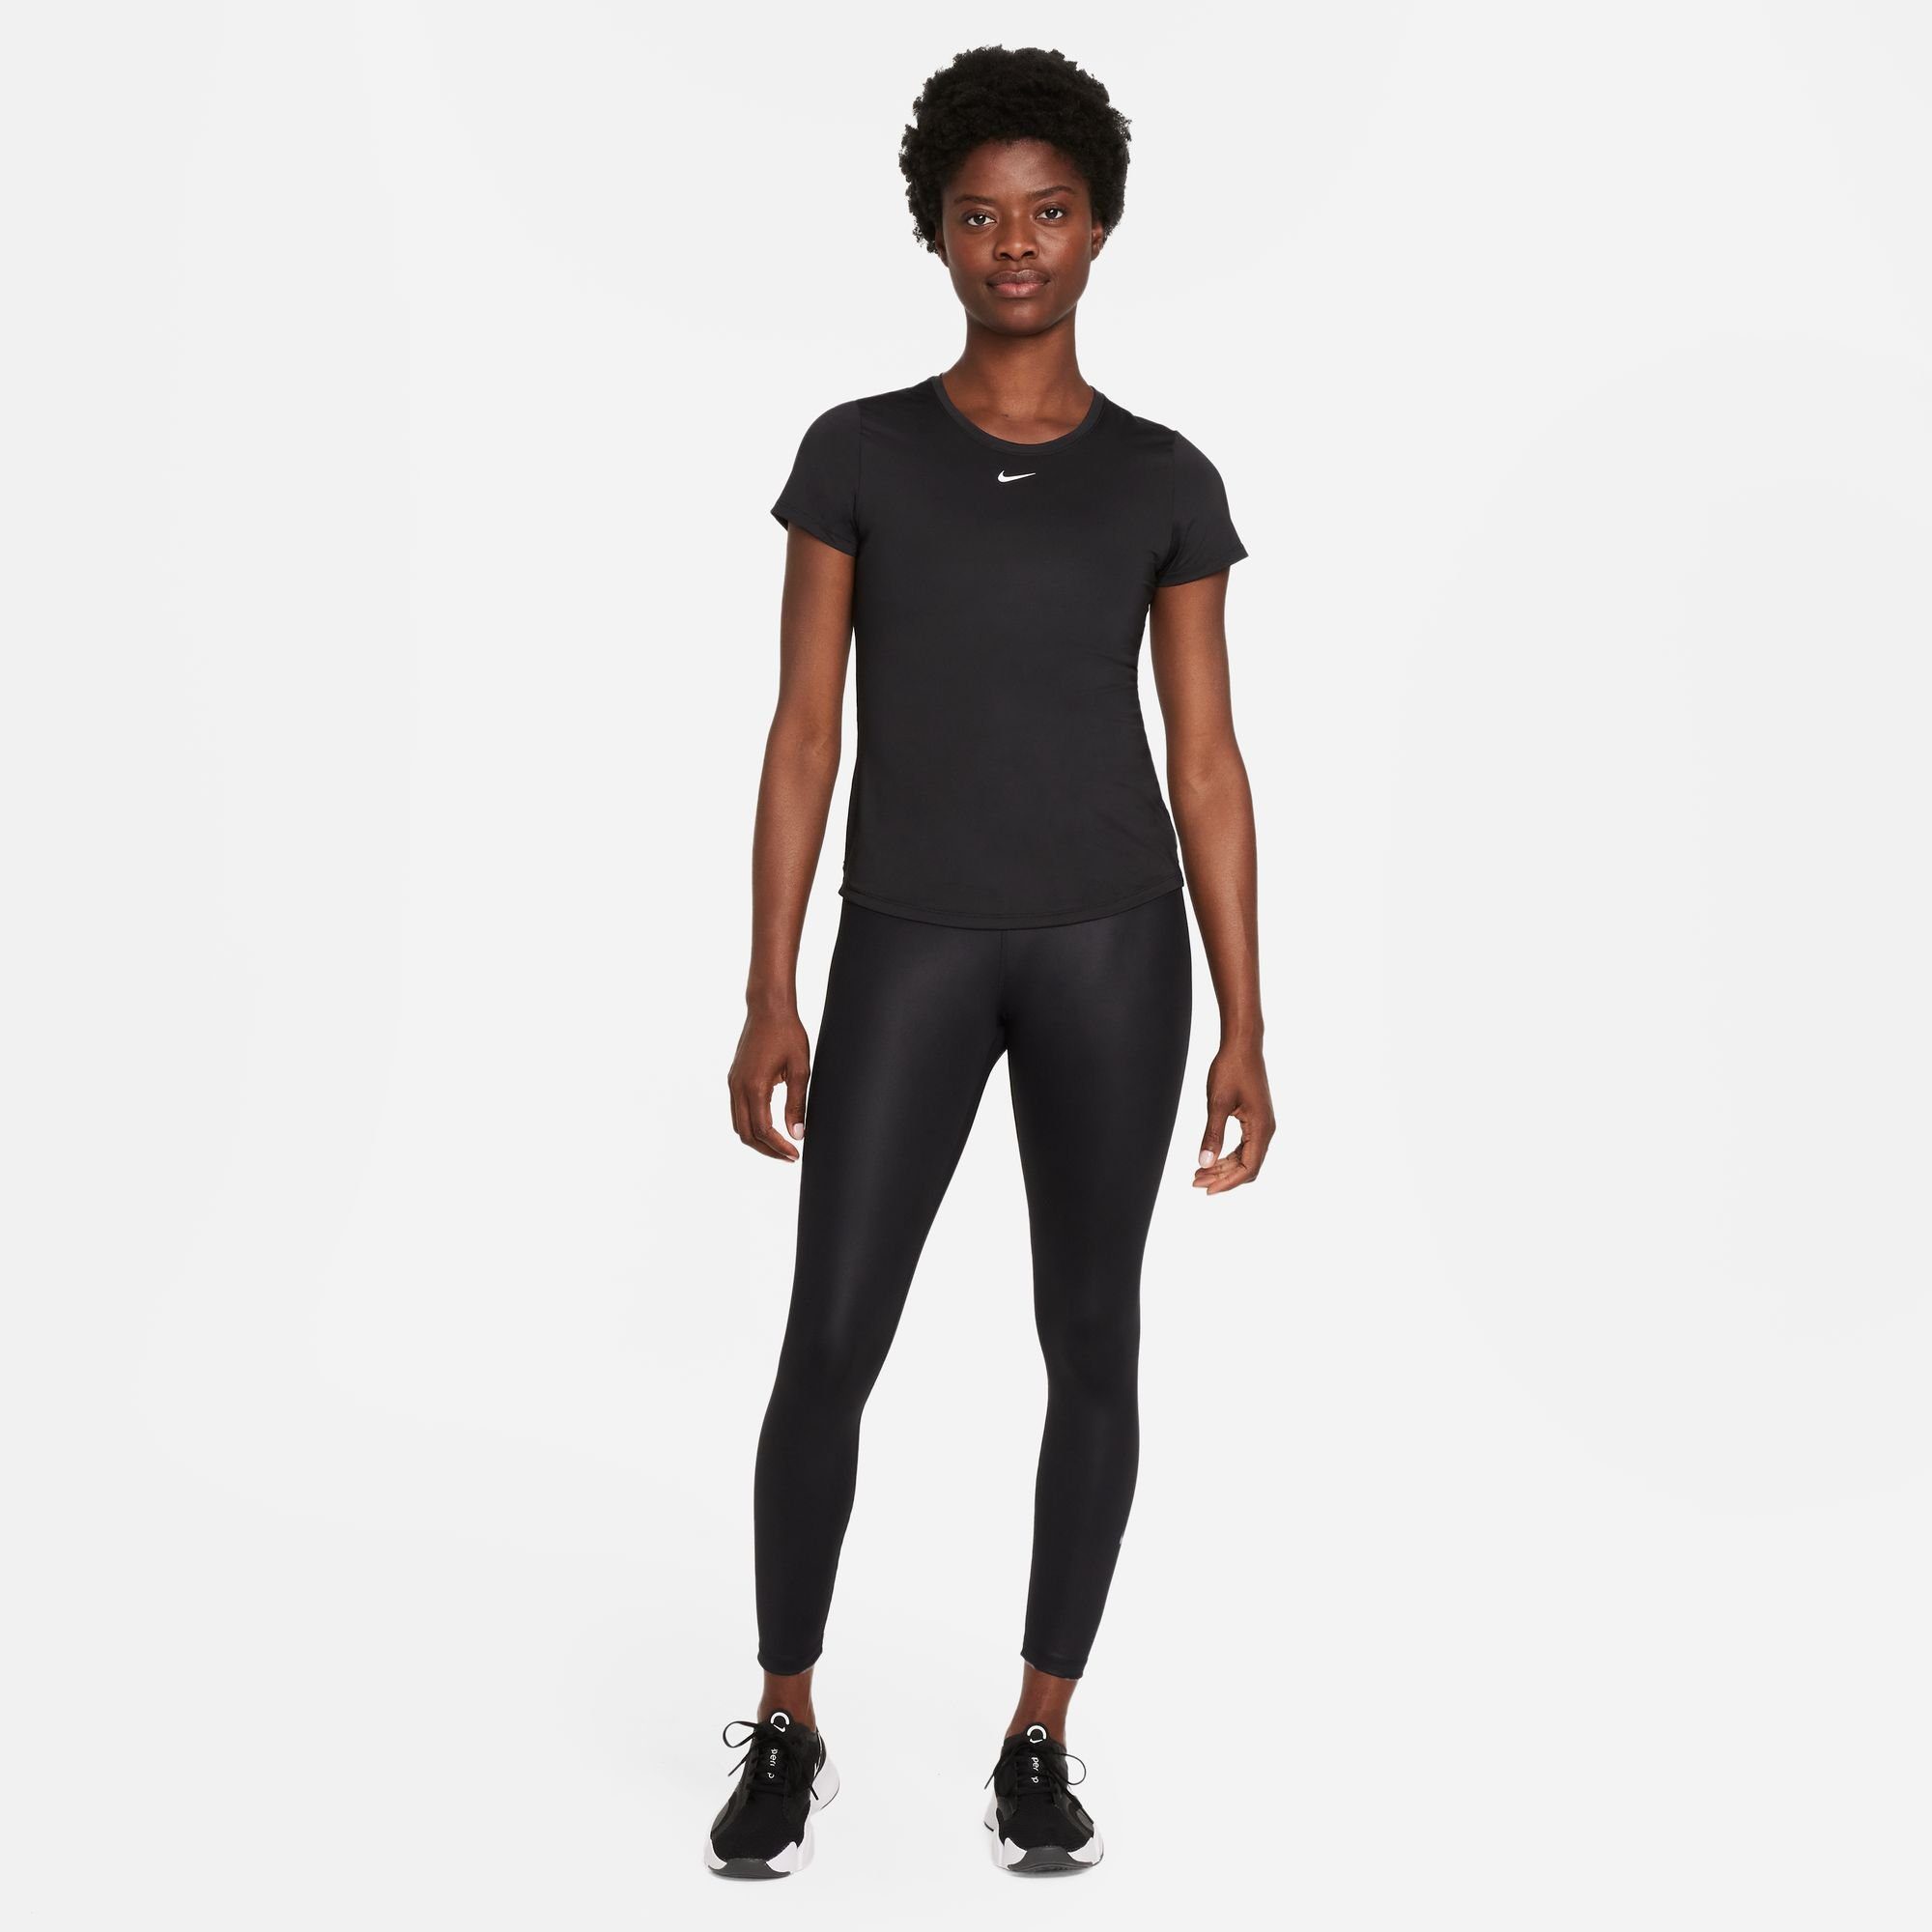 WOMEN'S SLIM TOP Nike SHORT-SLEEVE ONE schwarz Trainingsshirt FIT DRI-FIT